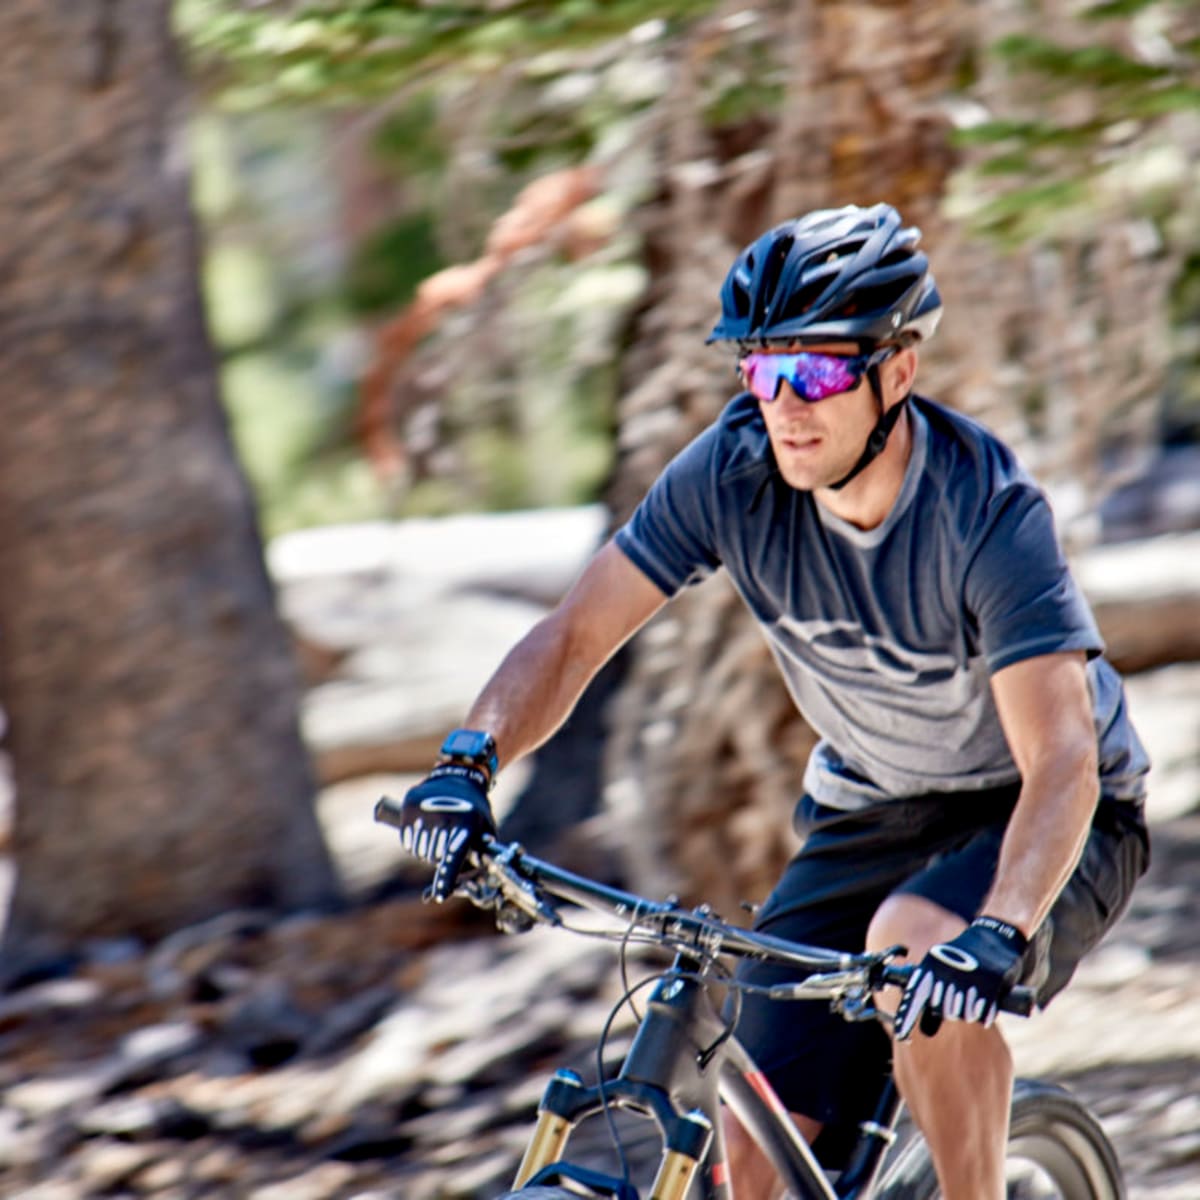 Oakley's Prizm lens will up your mountain biking confidence - Men's Journal